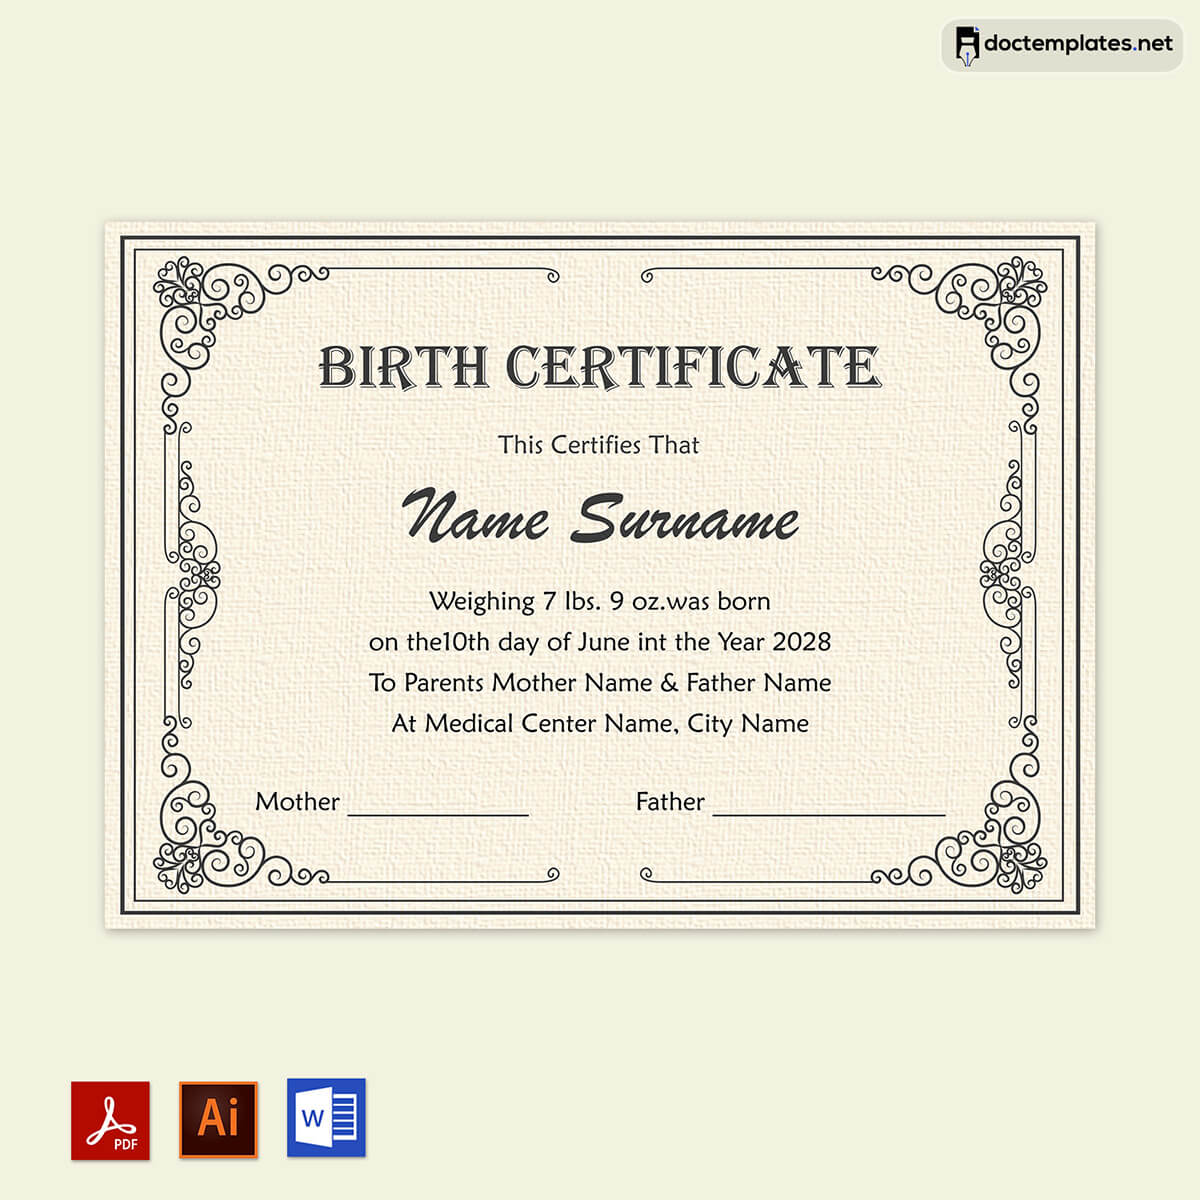 Image of Hospital birth certificate format PDF
Hospital birth certificate format PDF
01